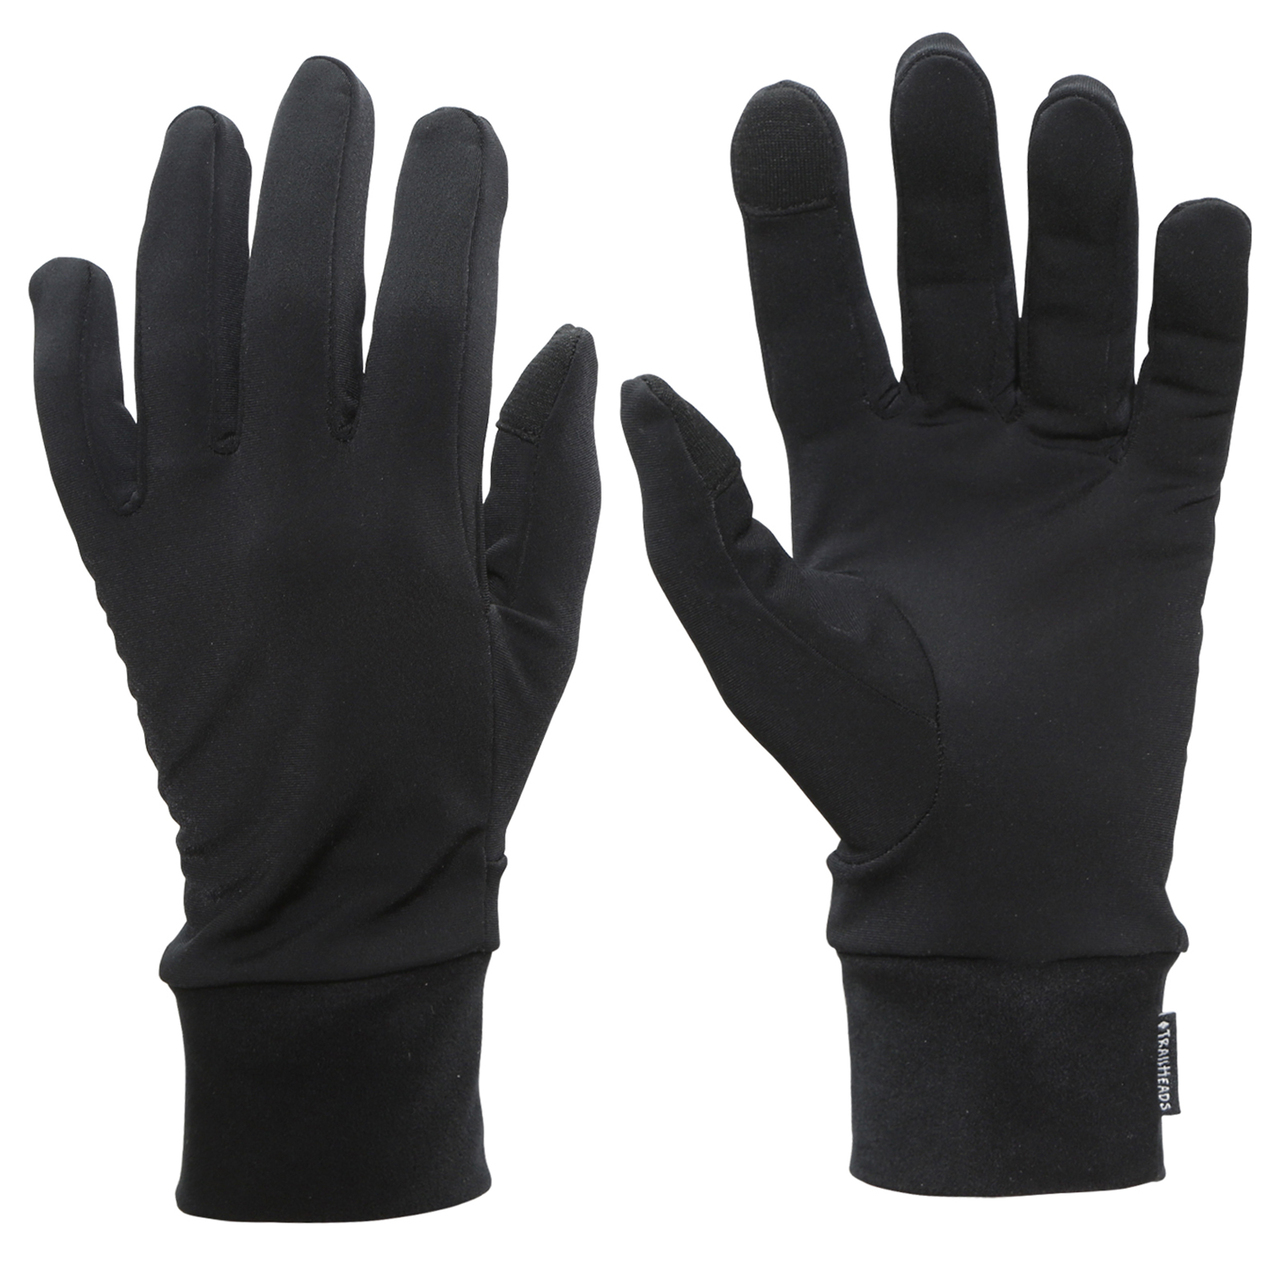 Men’s touchscreen running gloves